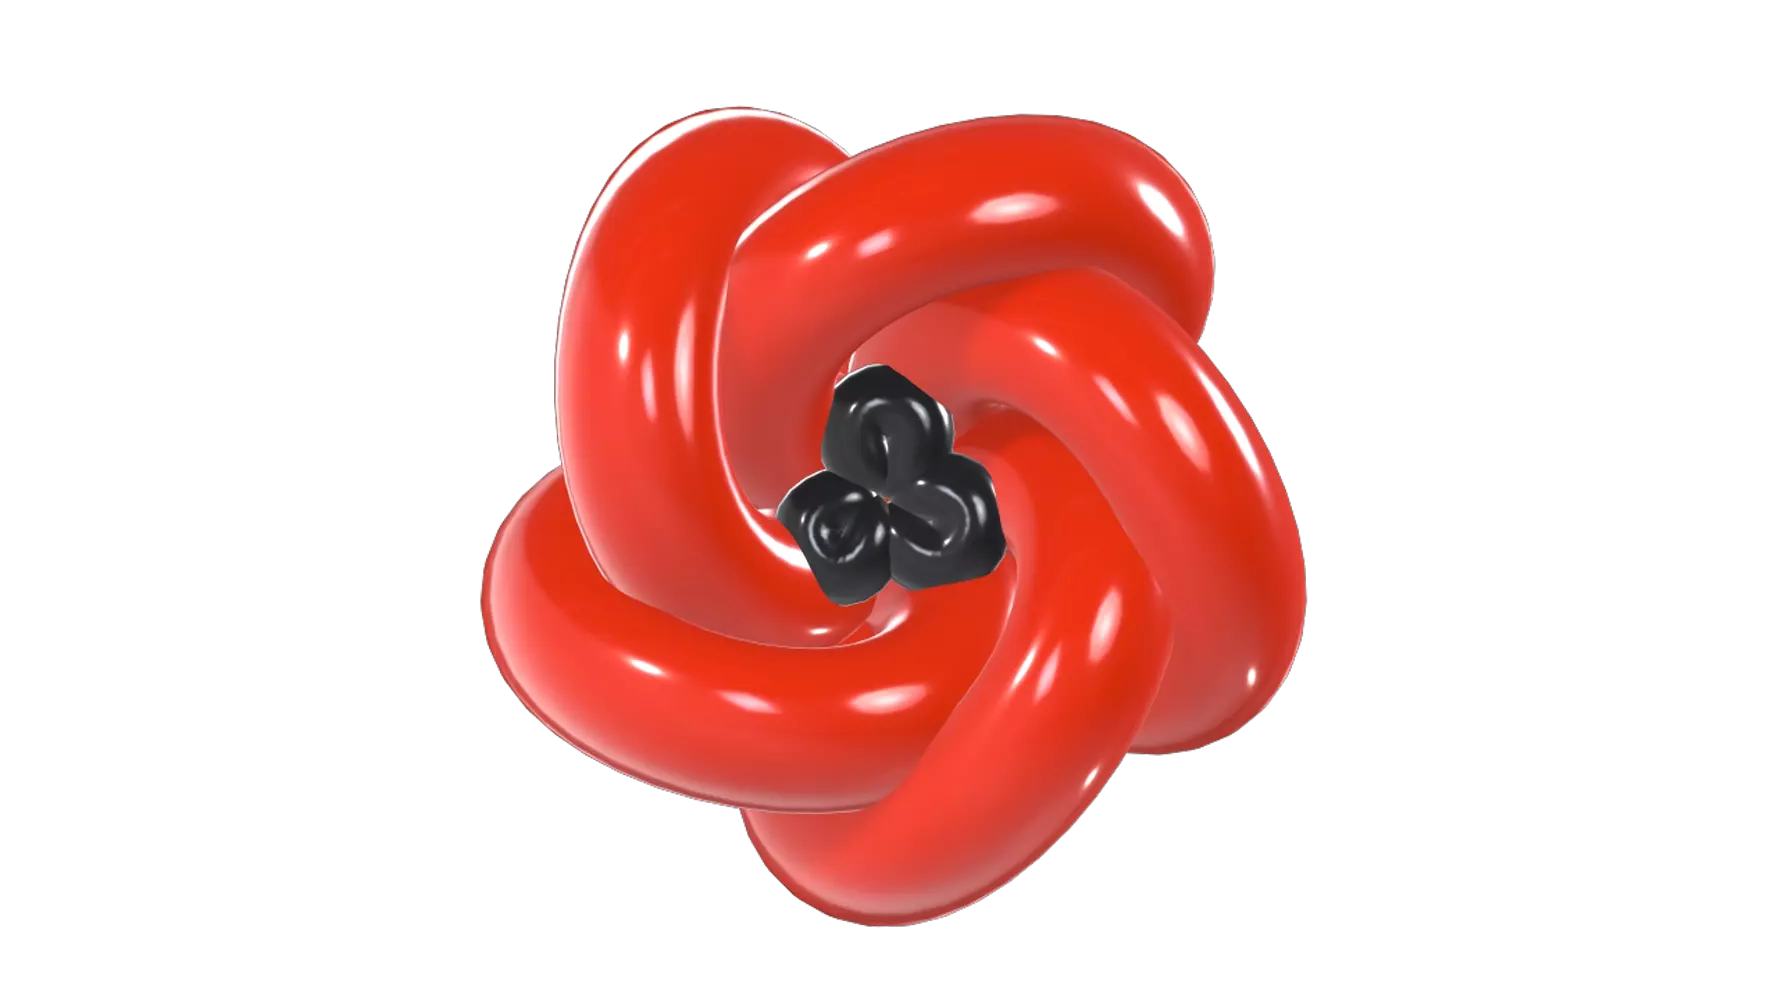 Poppy Plant Balloon 3D Graphic